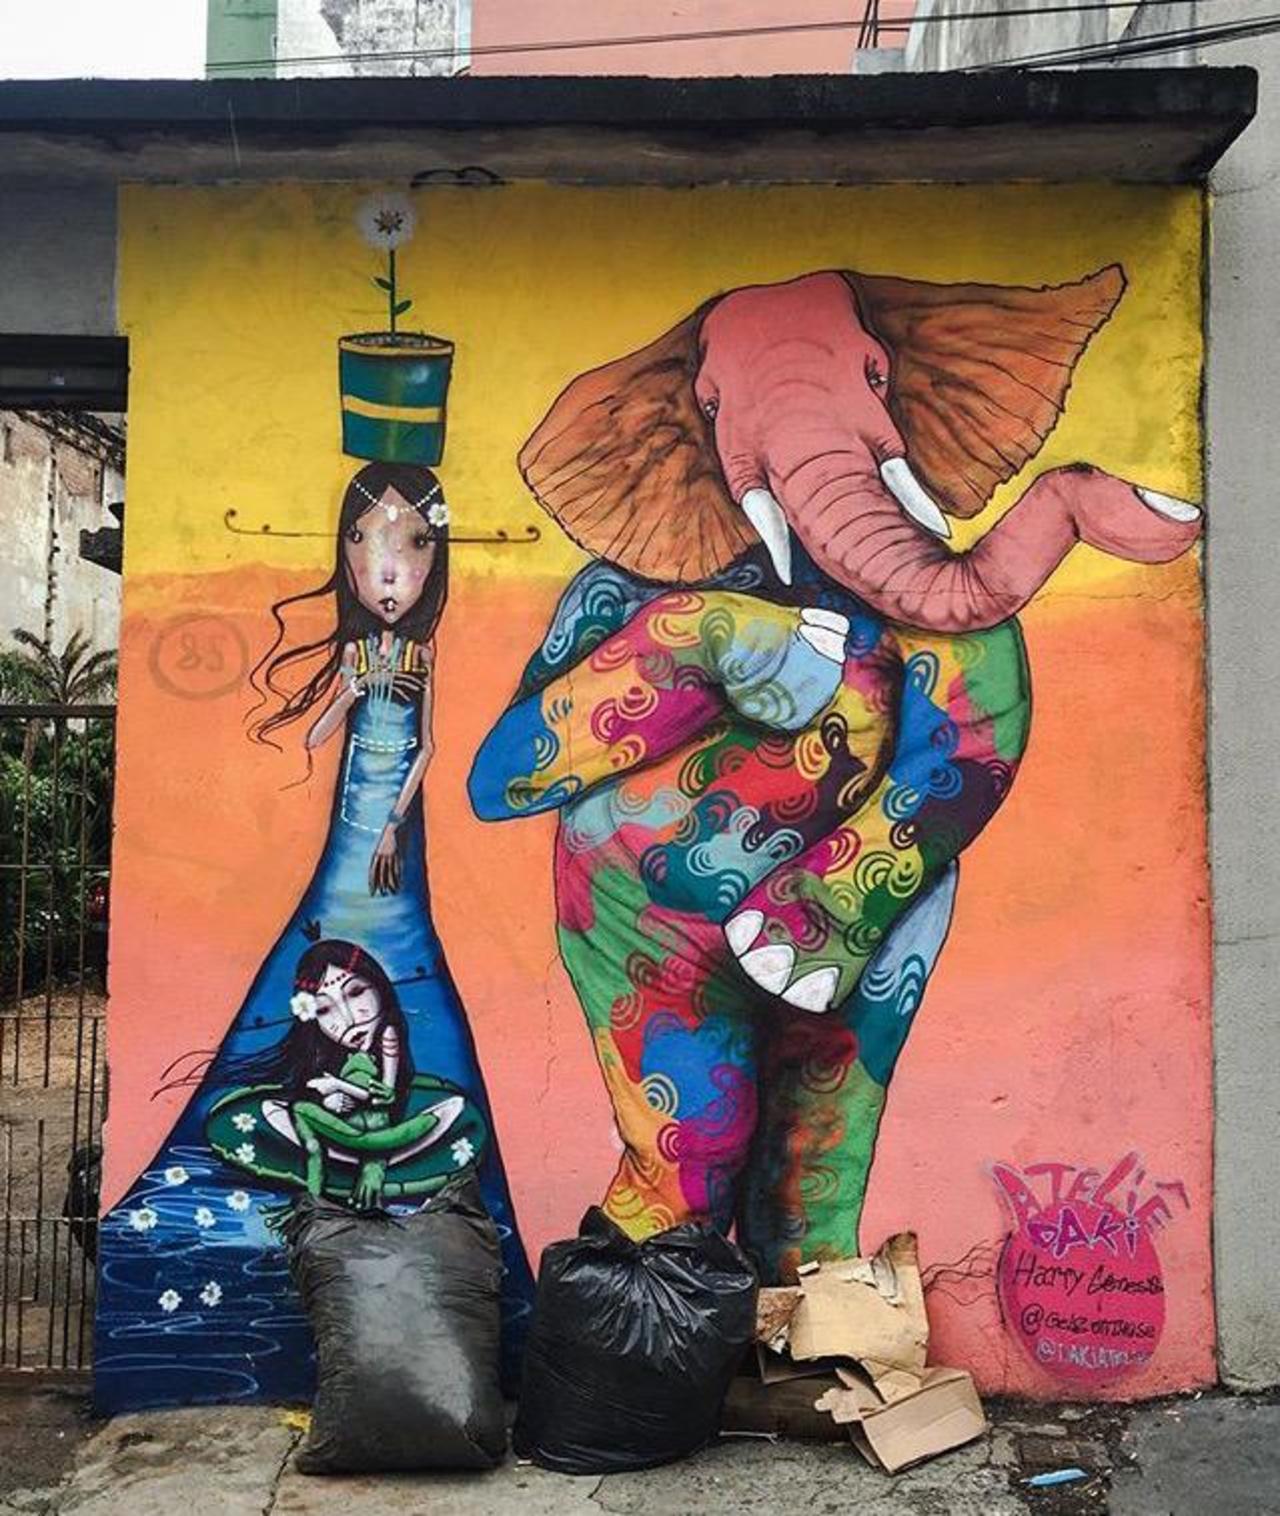 Street Art by Harry Geneis & Gelson in São Paulo 

#art #mural #graffiti #streetart http://t.co/SlLbhuMZfD … … …… http://twitter.com/GoogleStreetArt/status/648016473831645184/photo/1/large?utm_source=fb&utm_medium=fb&utm_campaign=charlesjackso14&utm_content=648018022544842752